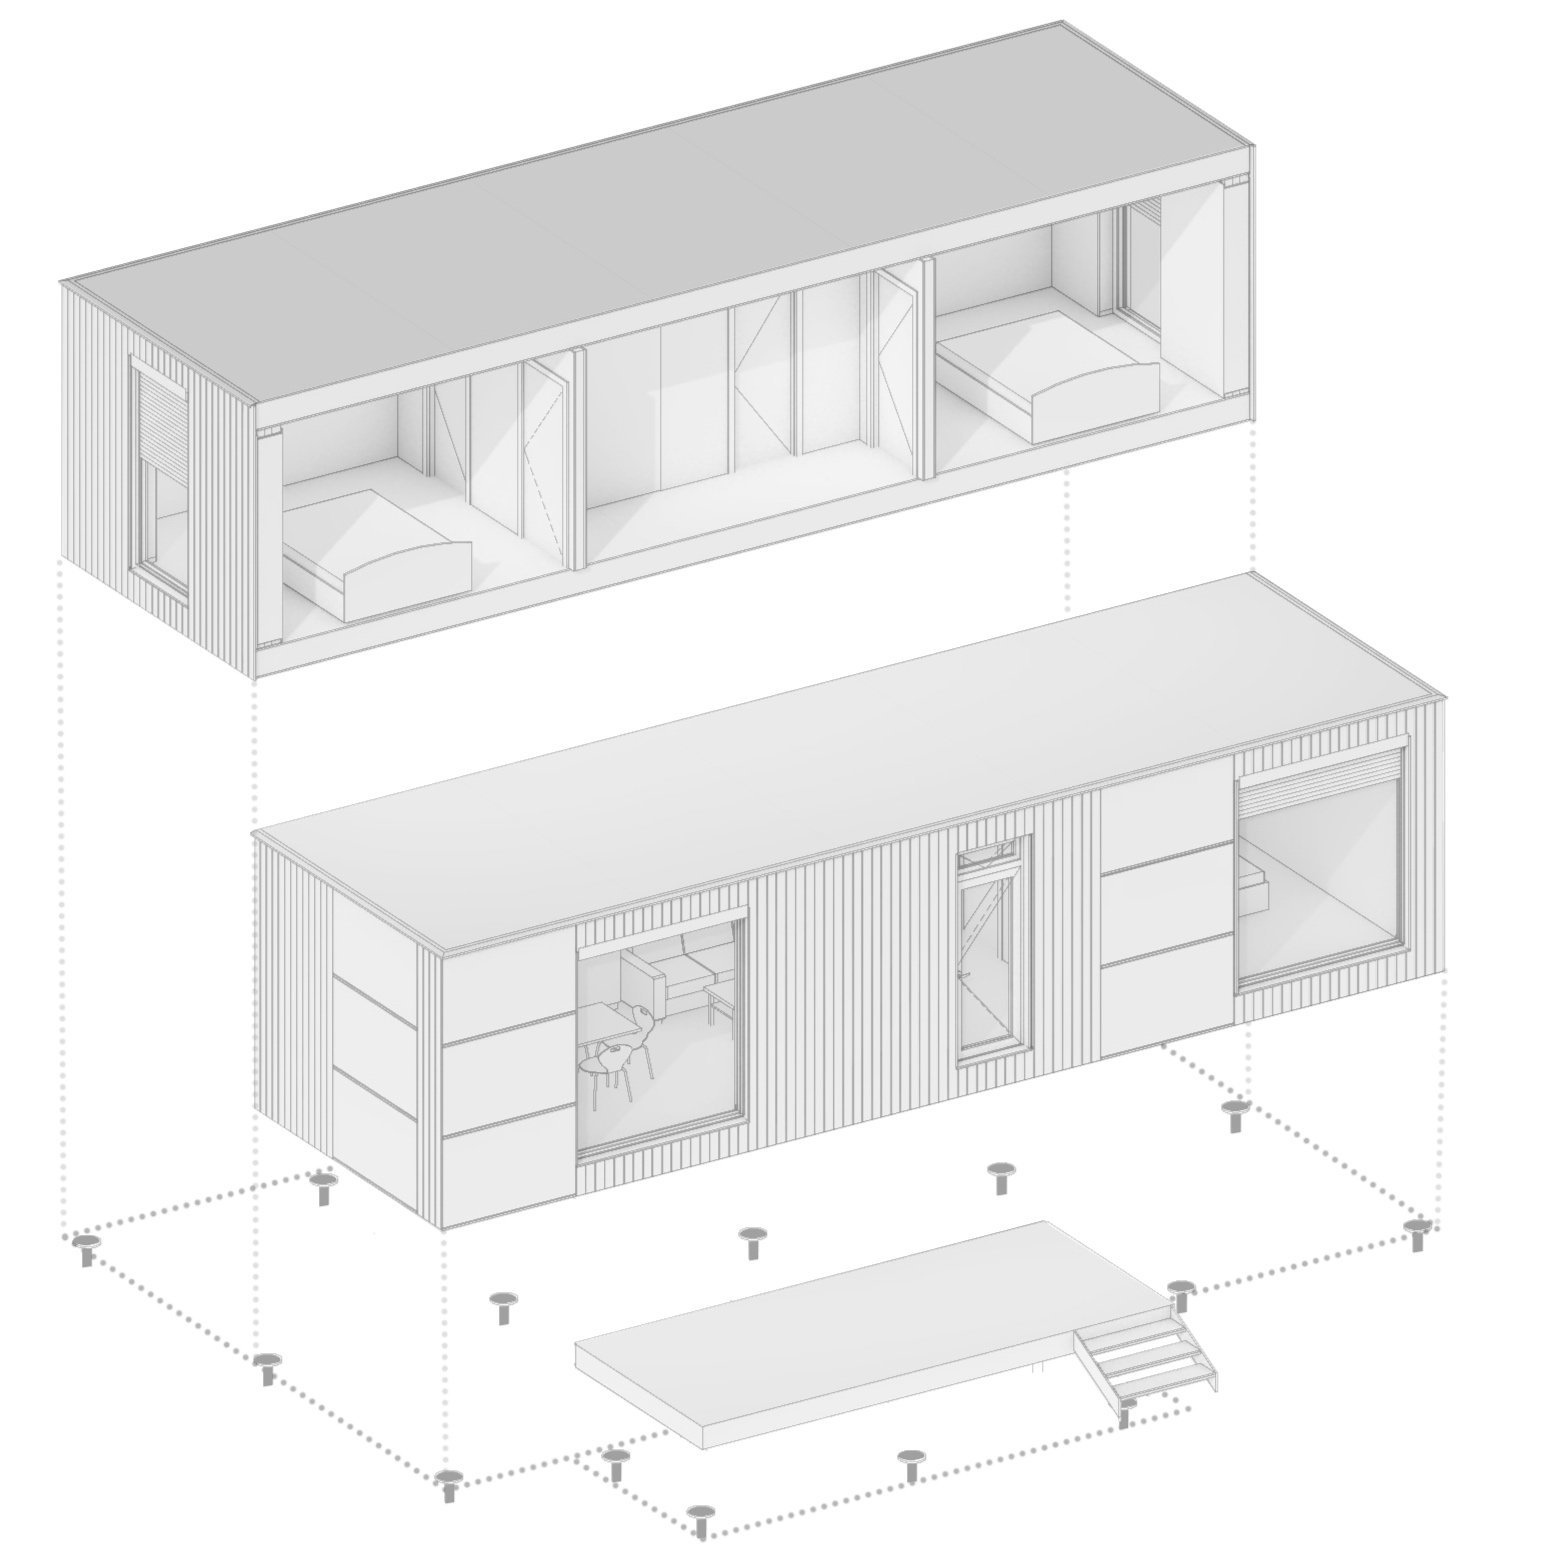 Foundation-Free Modular Homes, Turnkey Prefabricated Houses,  Zero Site Work Construction